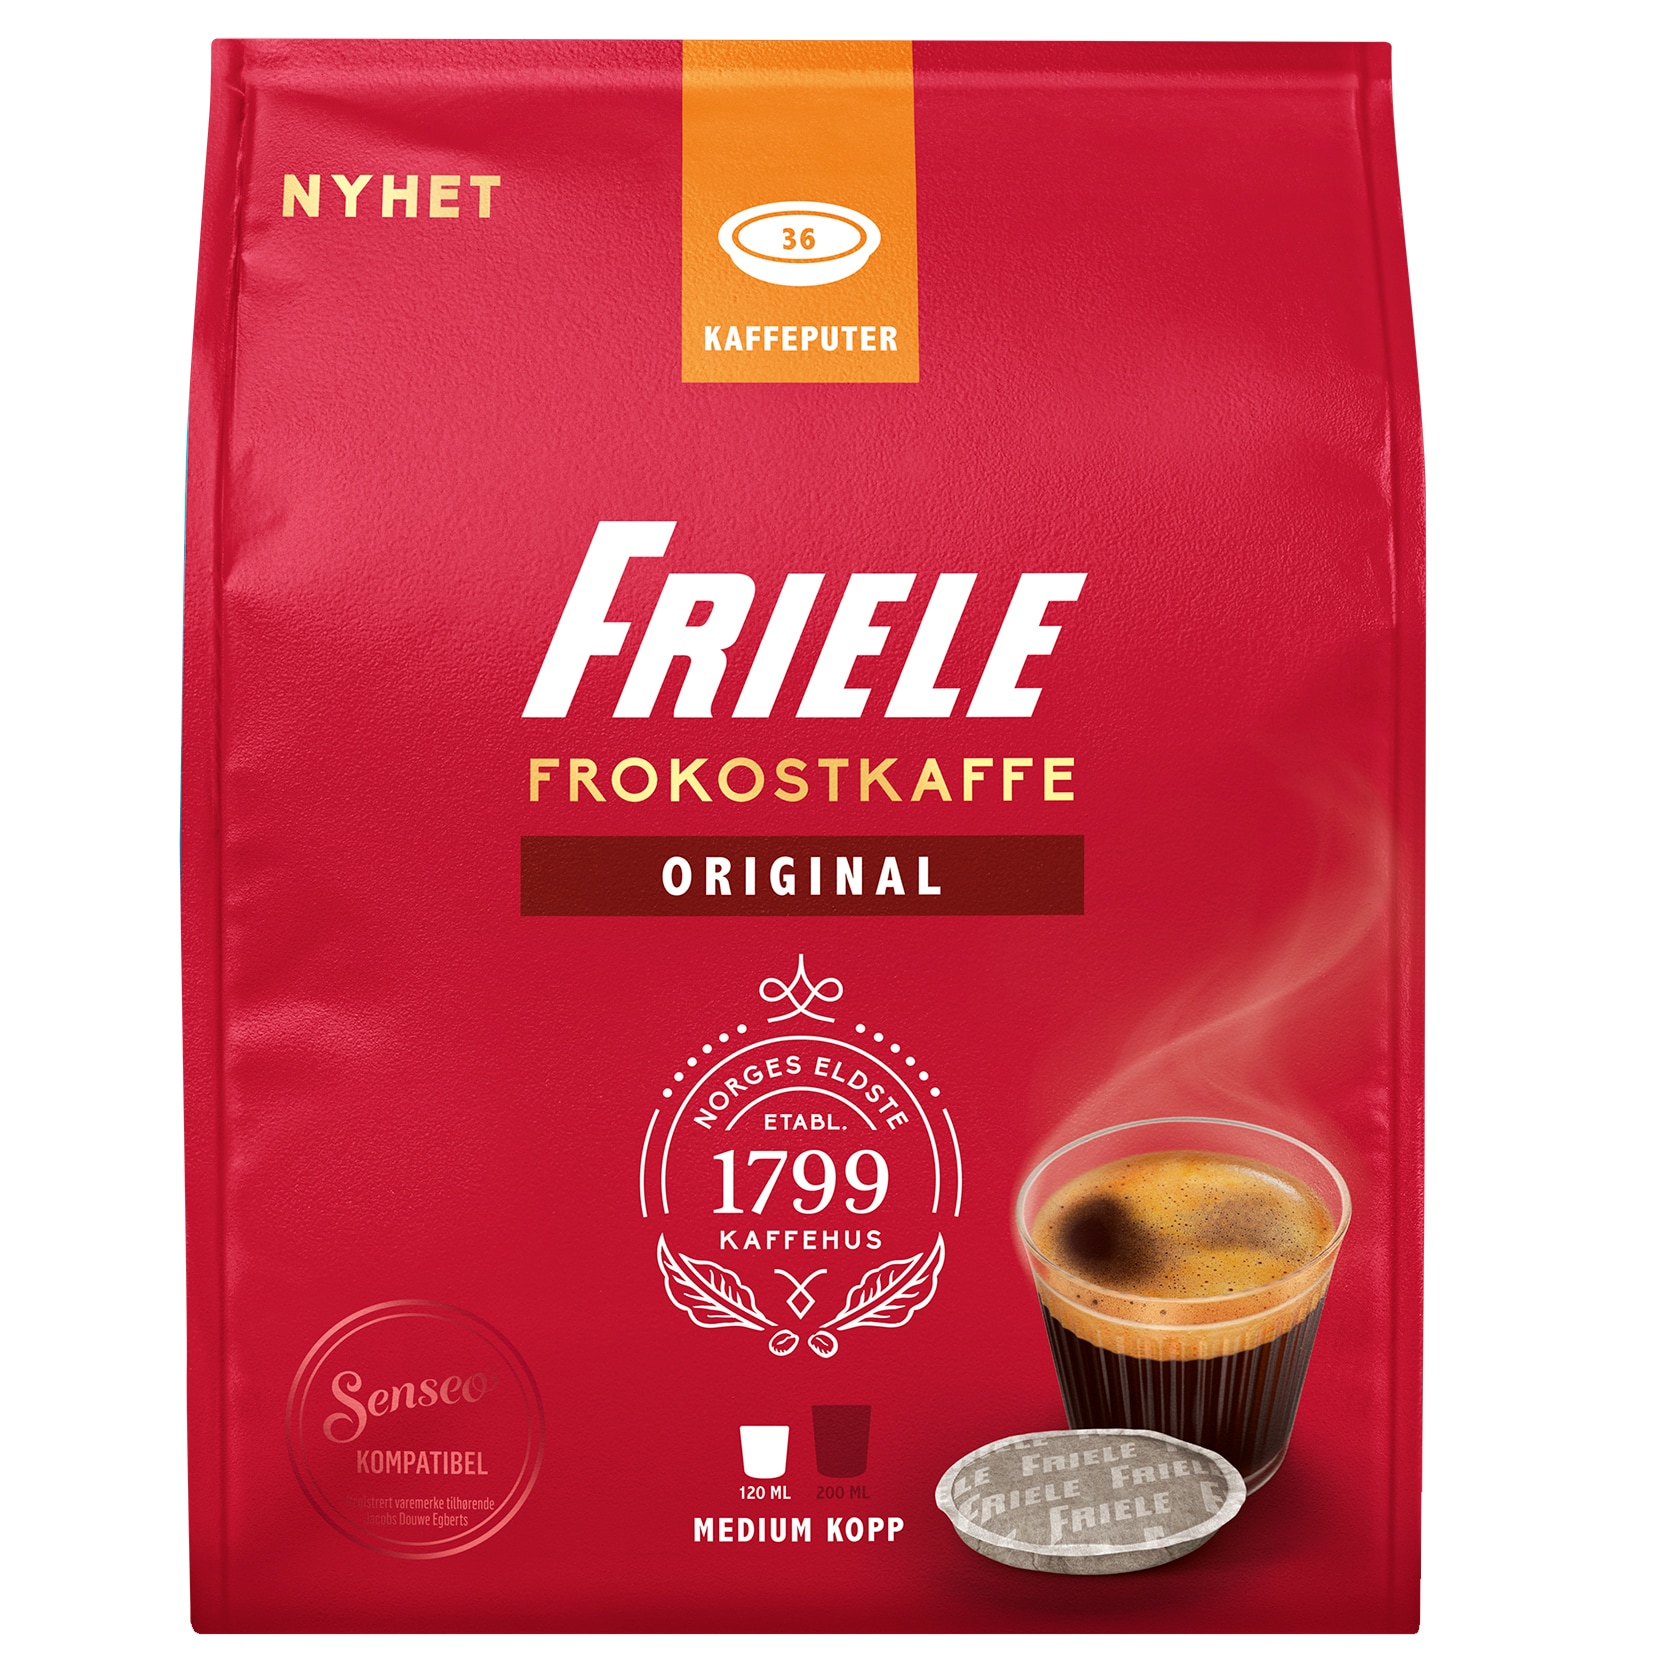 Friele Standard kaffepuder (36 stk)